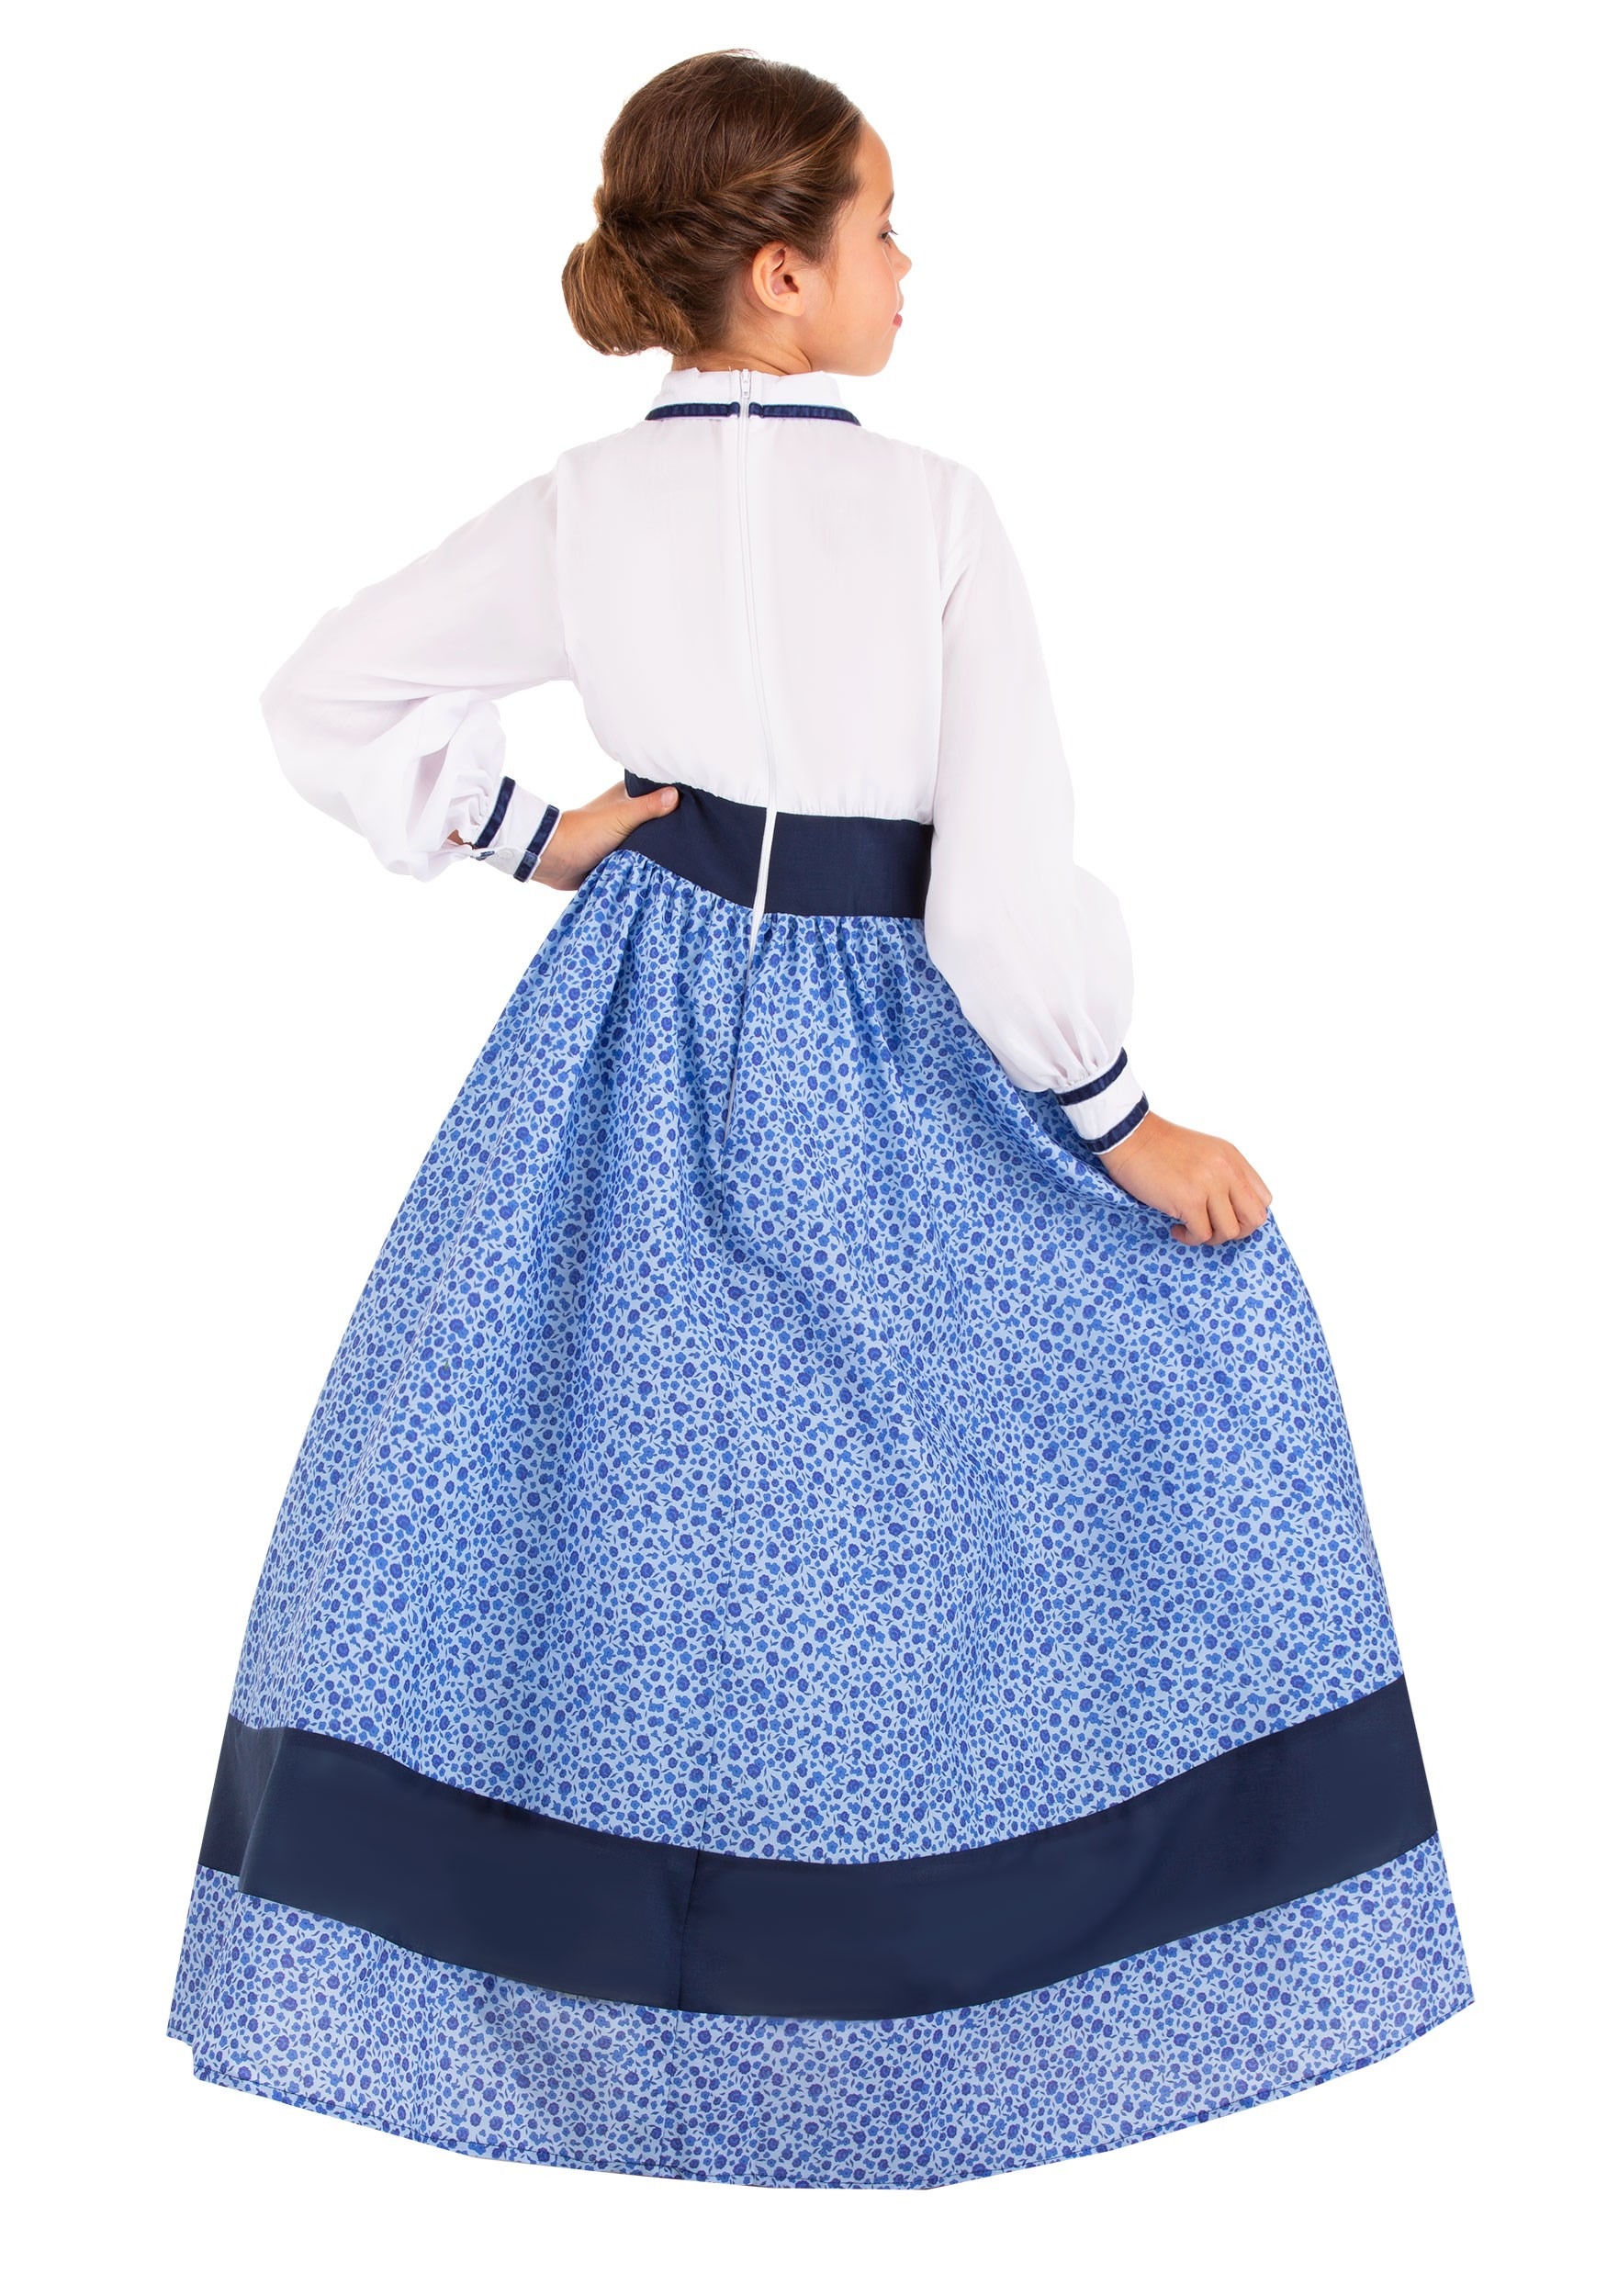 Prairie Girl's Dress Costume